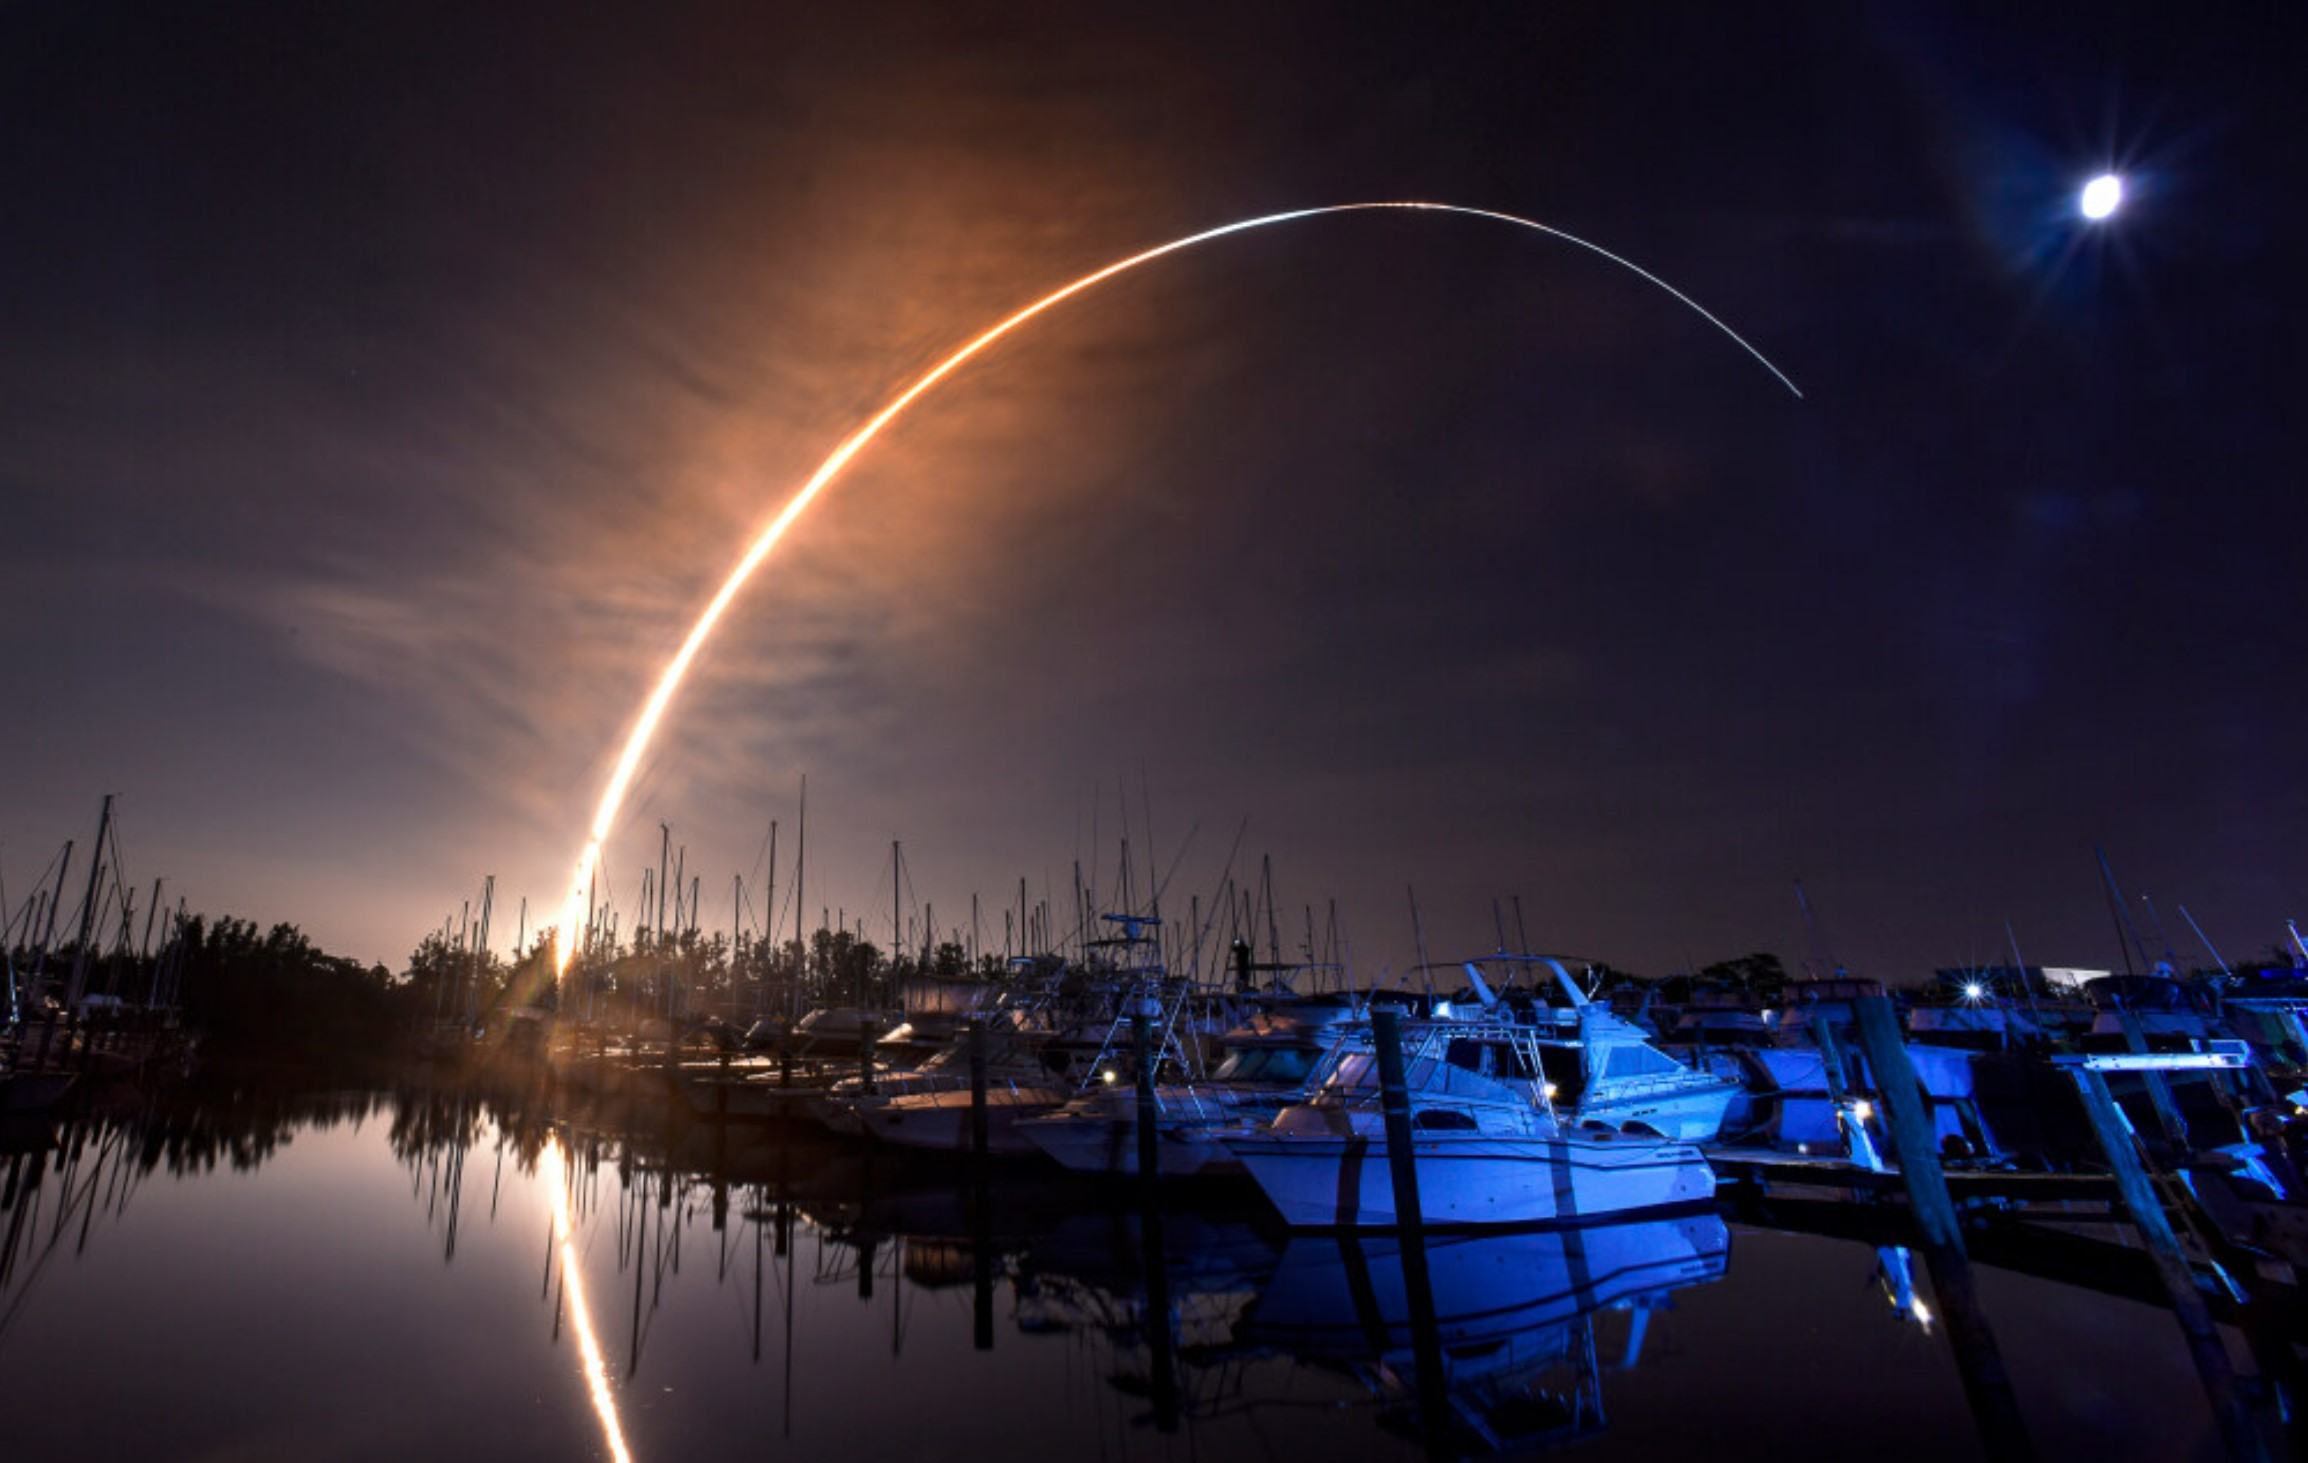 NASA’s new moon rocket lifts off 50 years after Apollo — PHOTOS